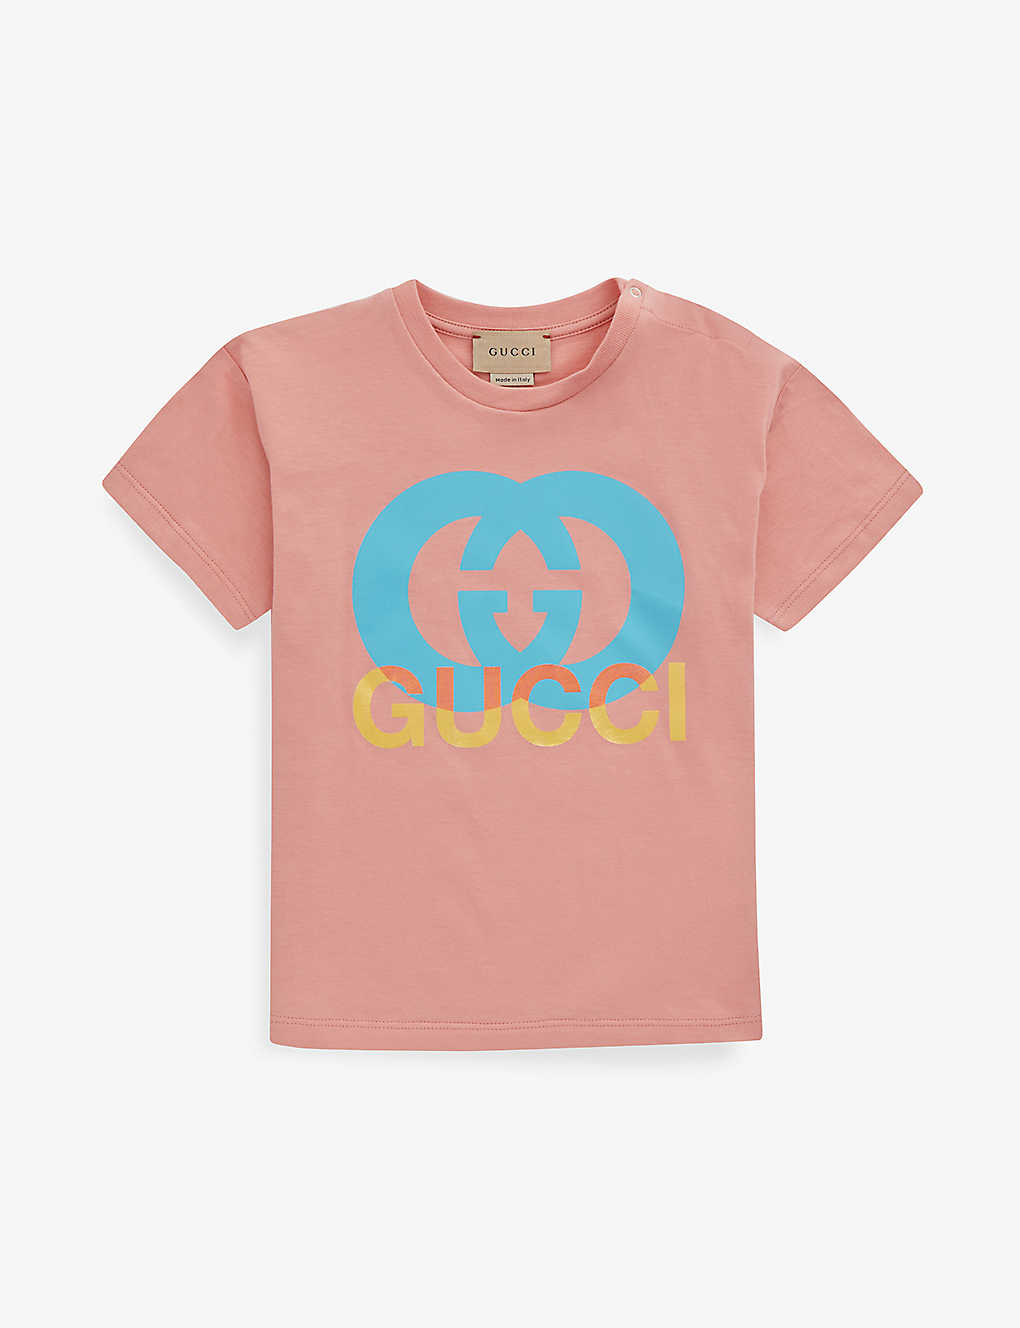 Gucci Babies' Printed T-shirt In Vintage Rose/mc